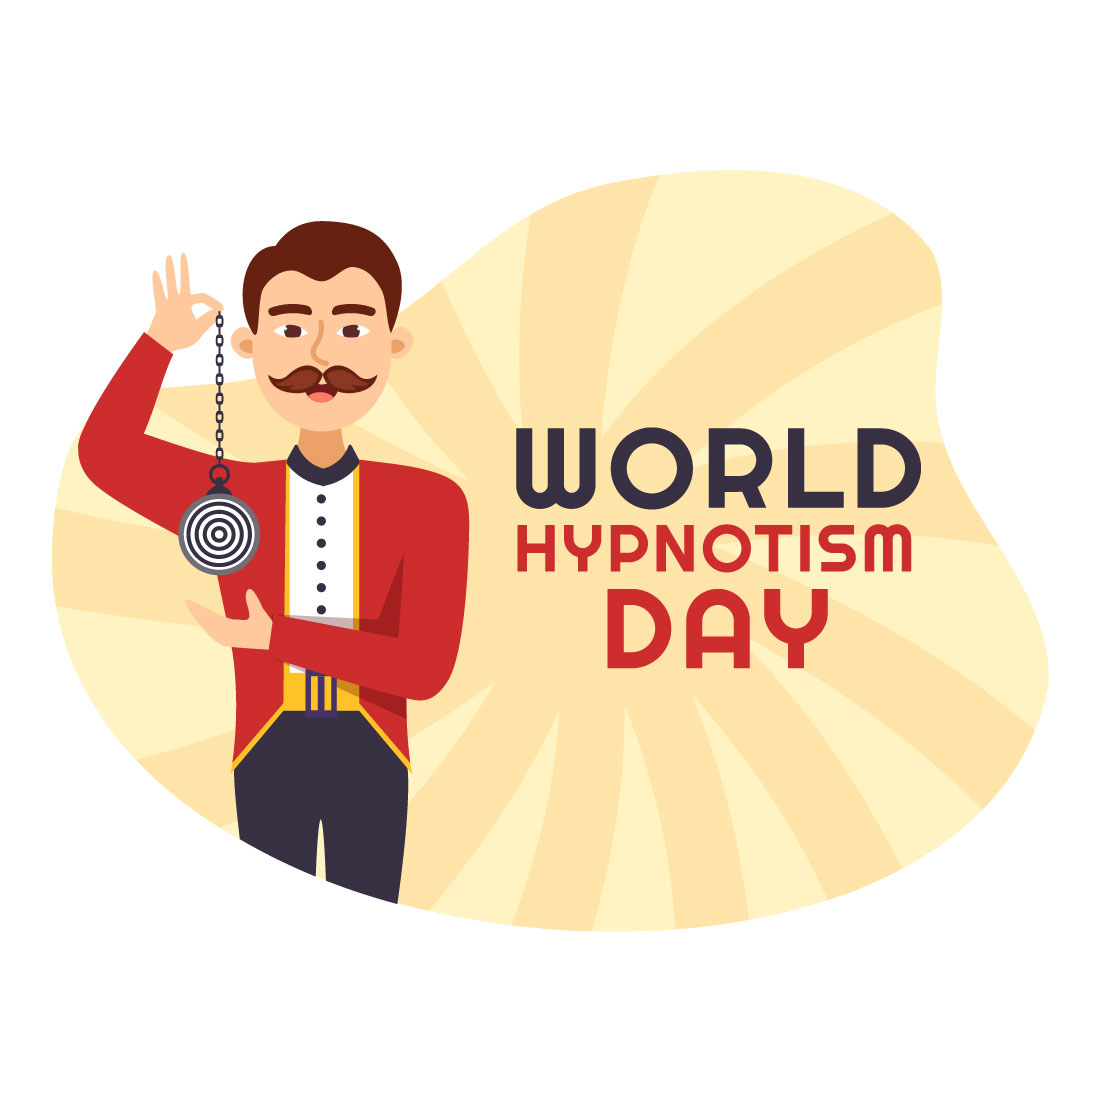 World Hypnotism Day Illustration cover image.